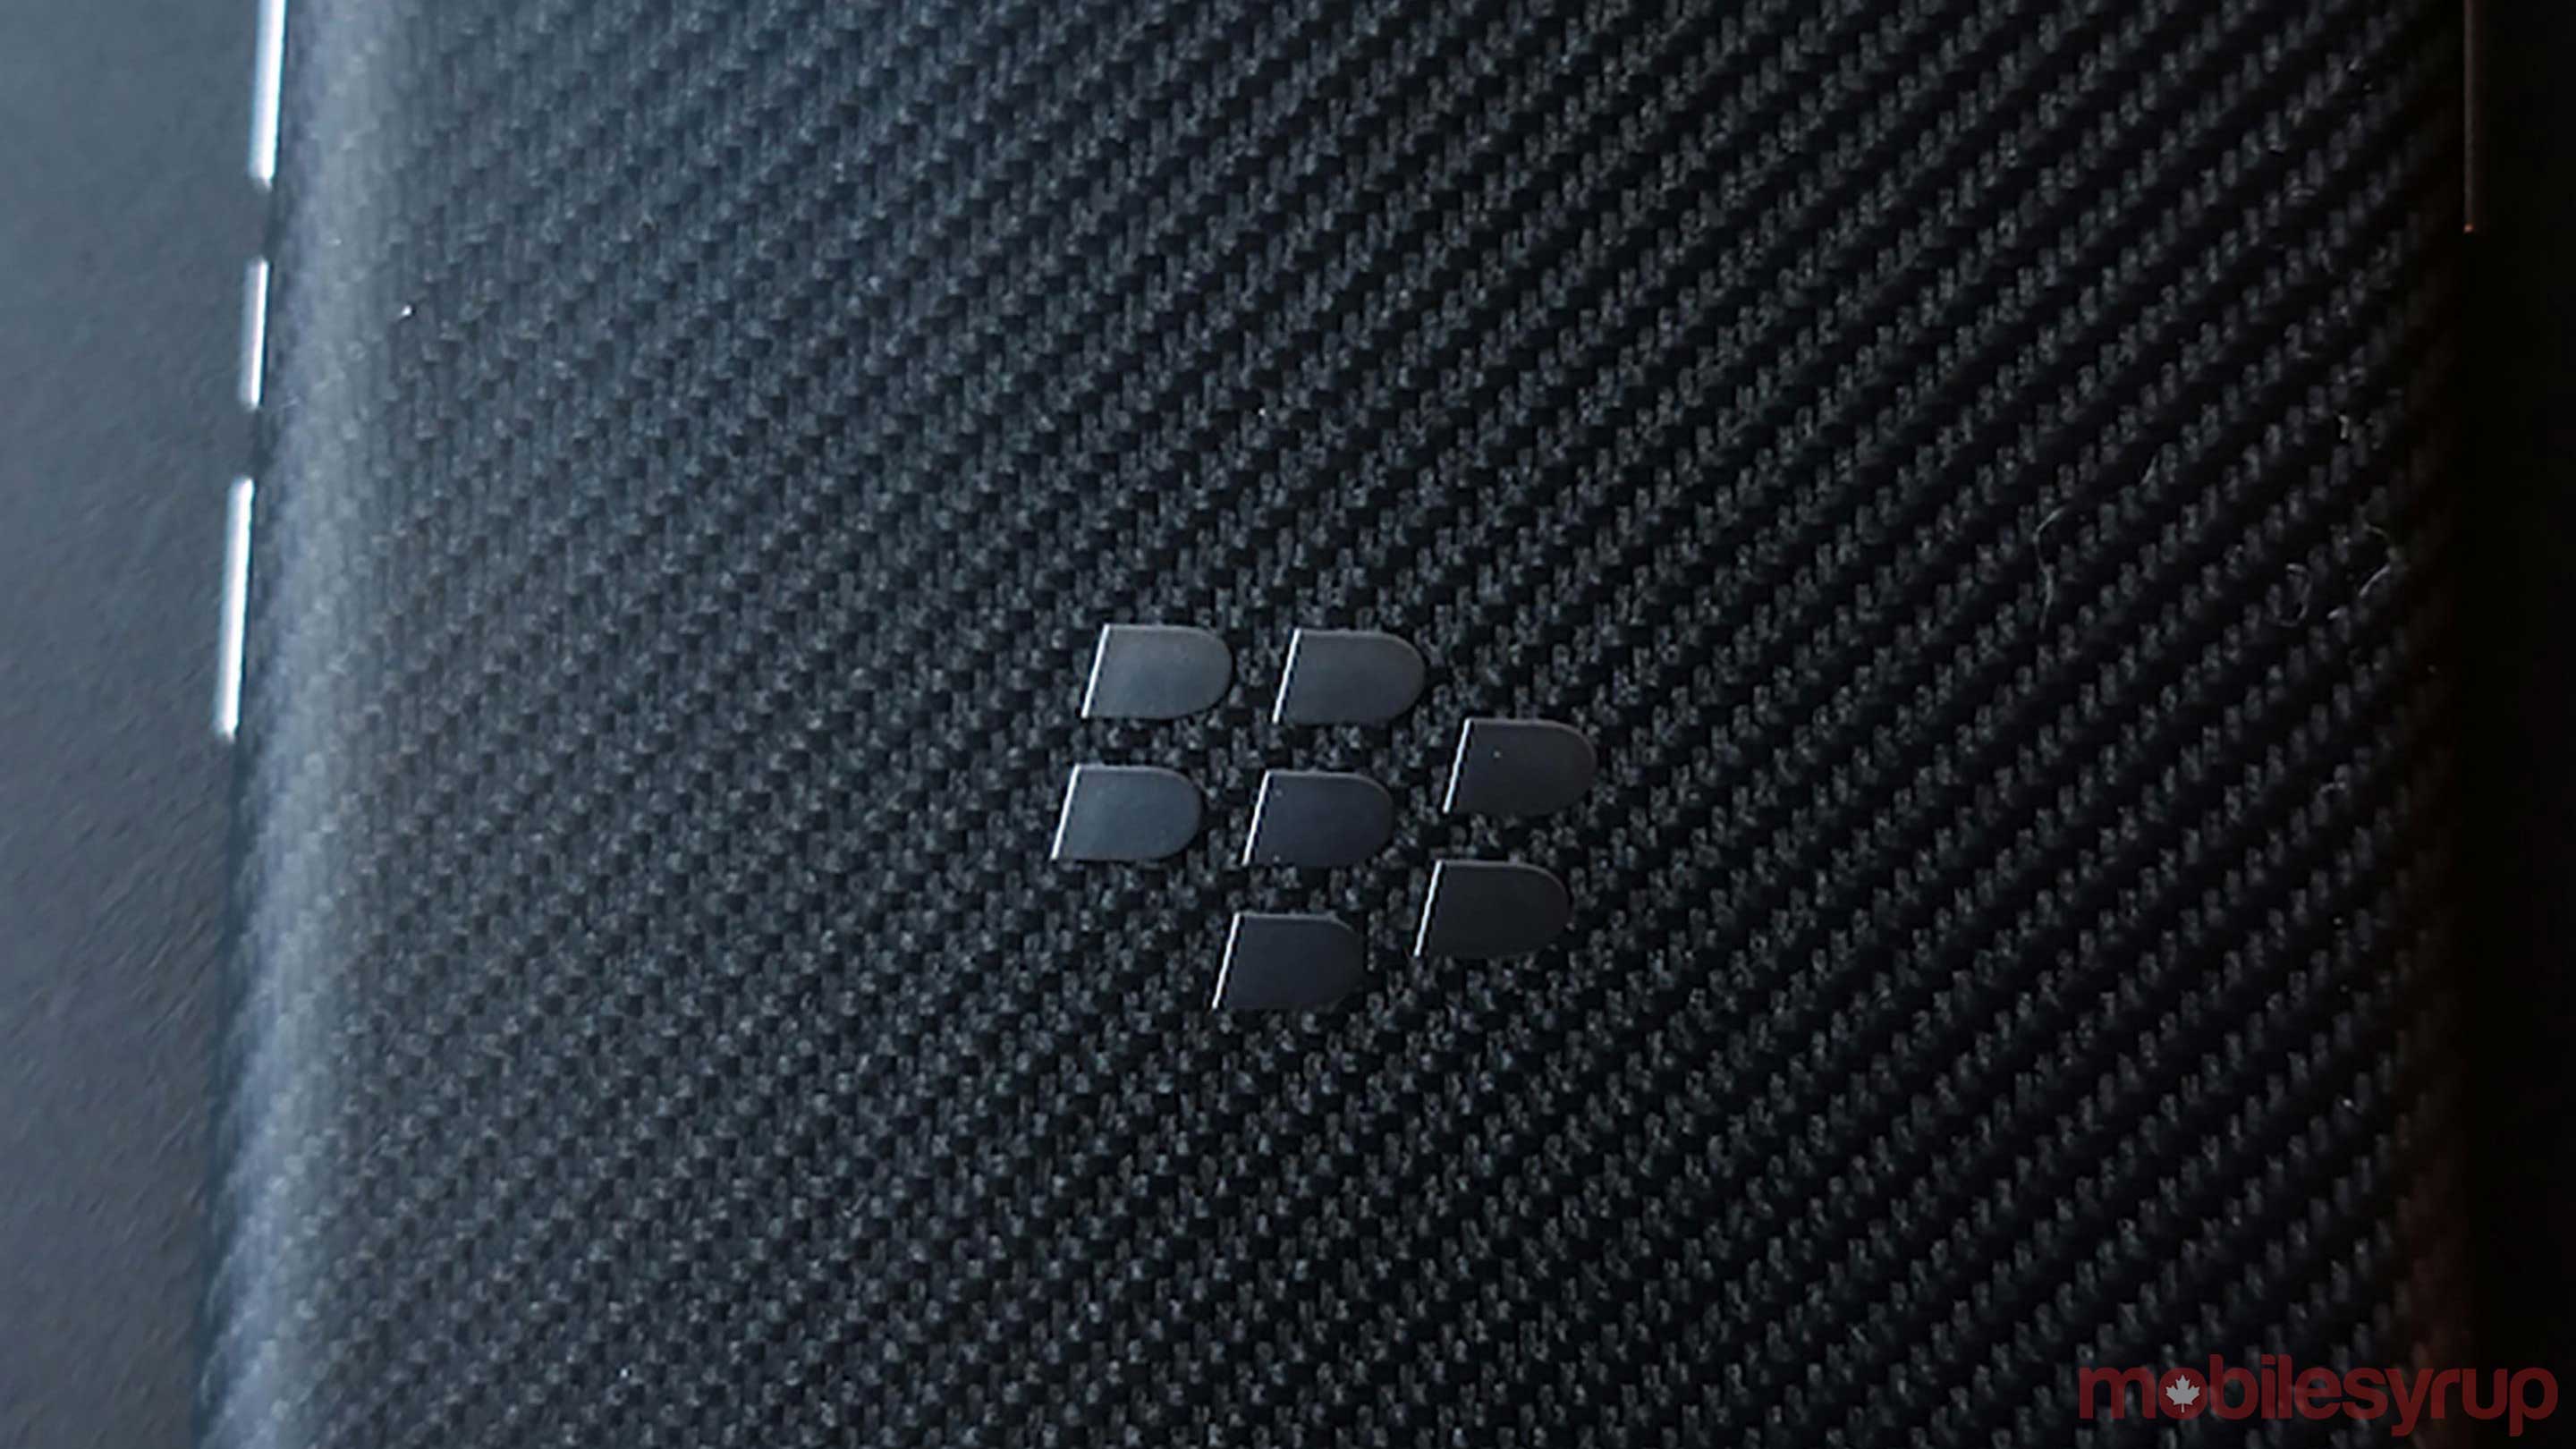 blackberry back of phone - blackberry android BBM